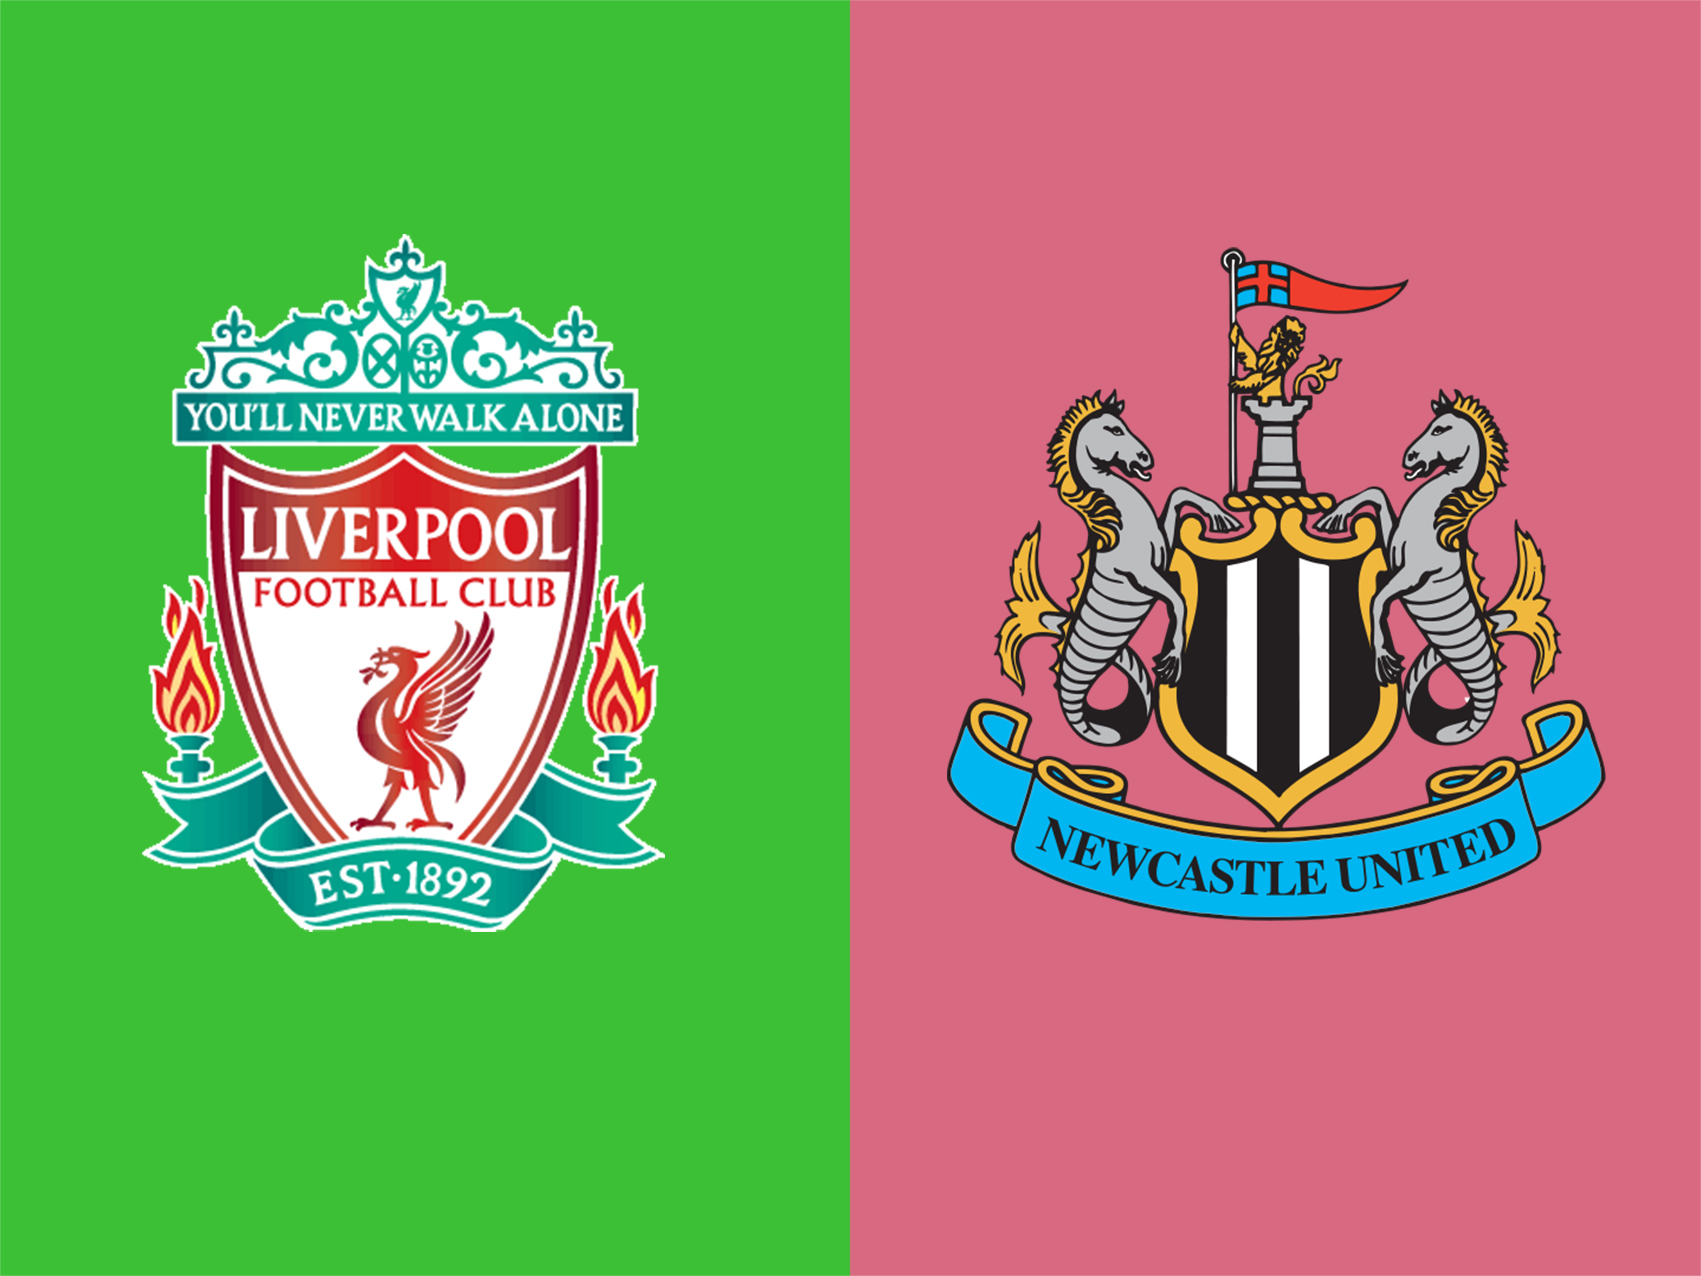 soi-keo-ca-cuoc-bong-da-ngay-14-9-Liverpool-vs-Newcastle-do-it-thang-do-nhieu-b9